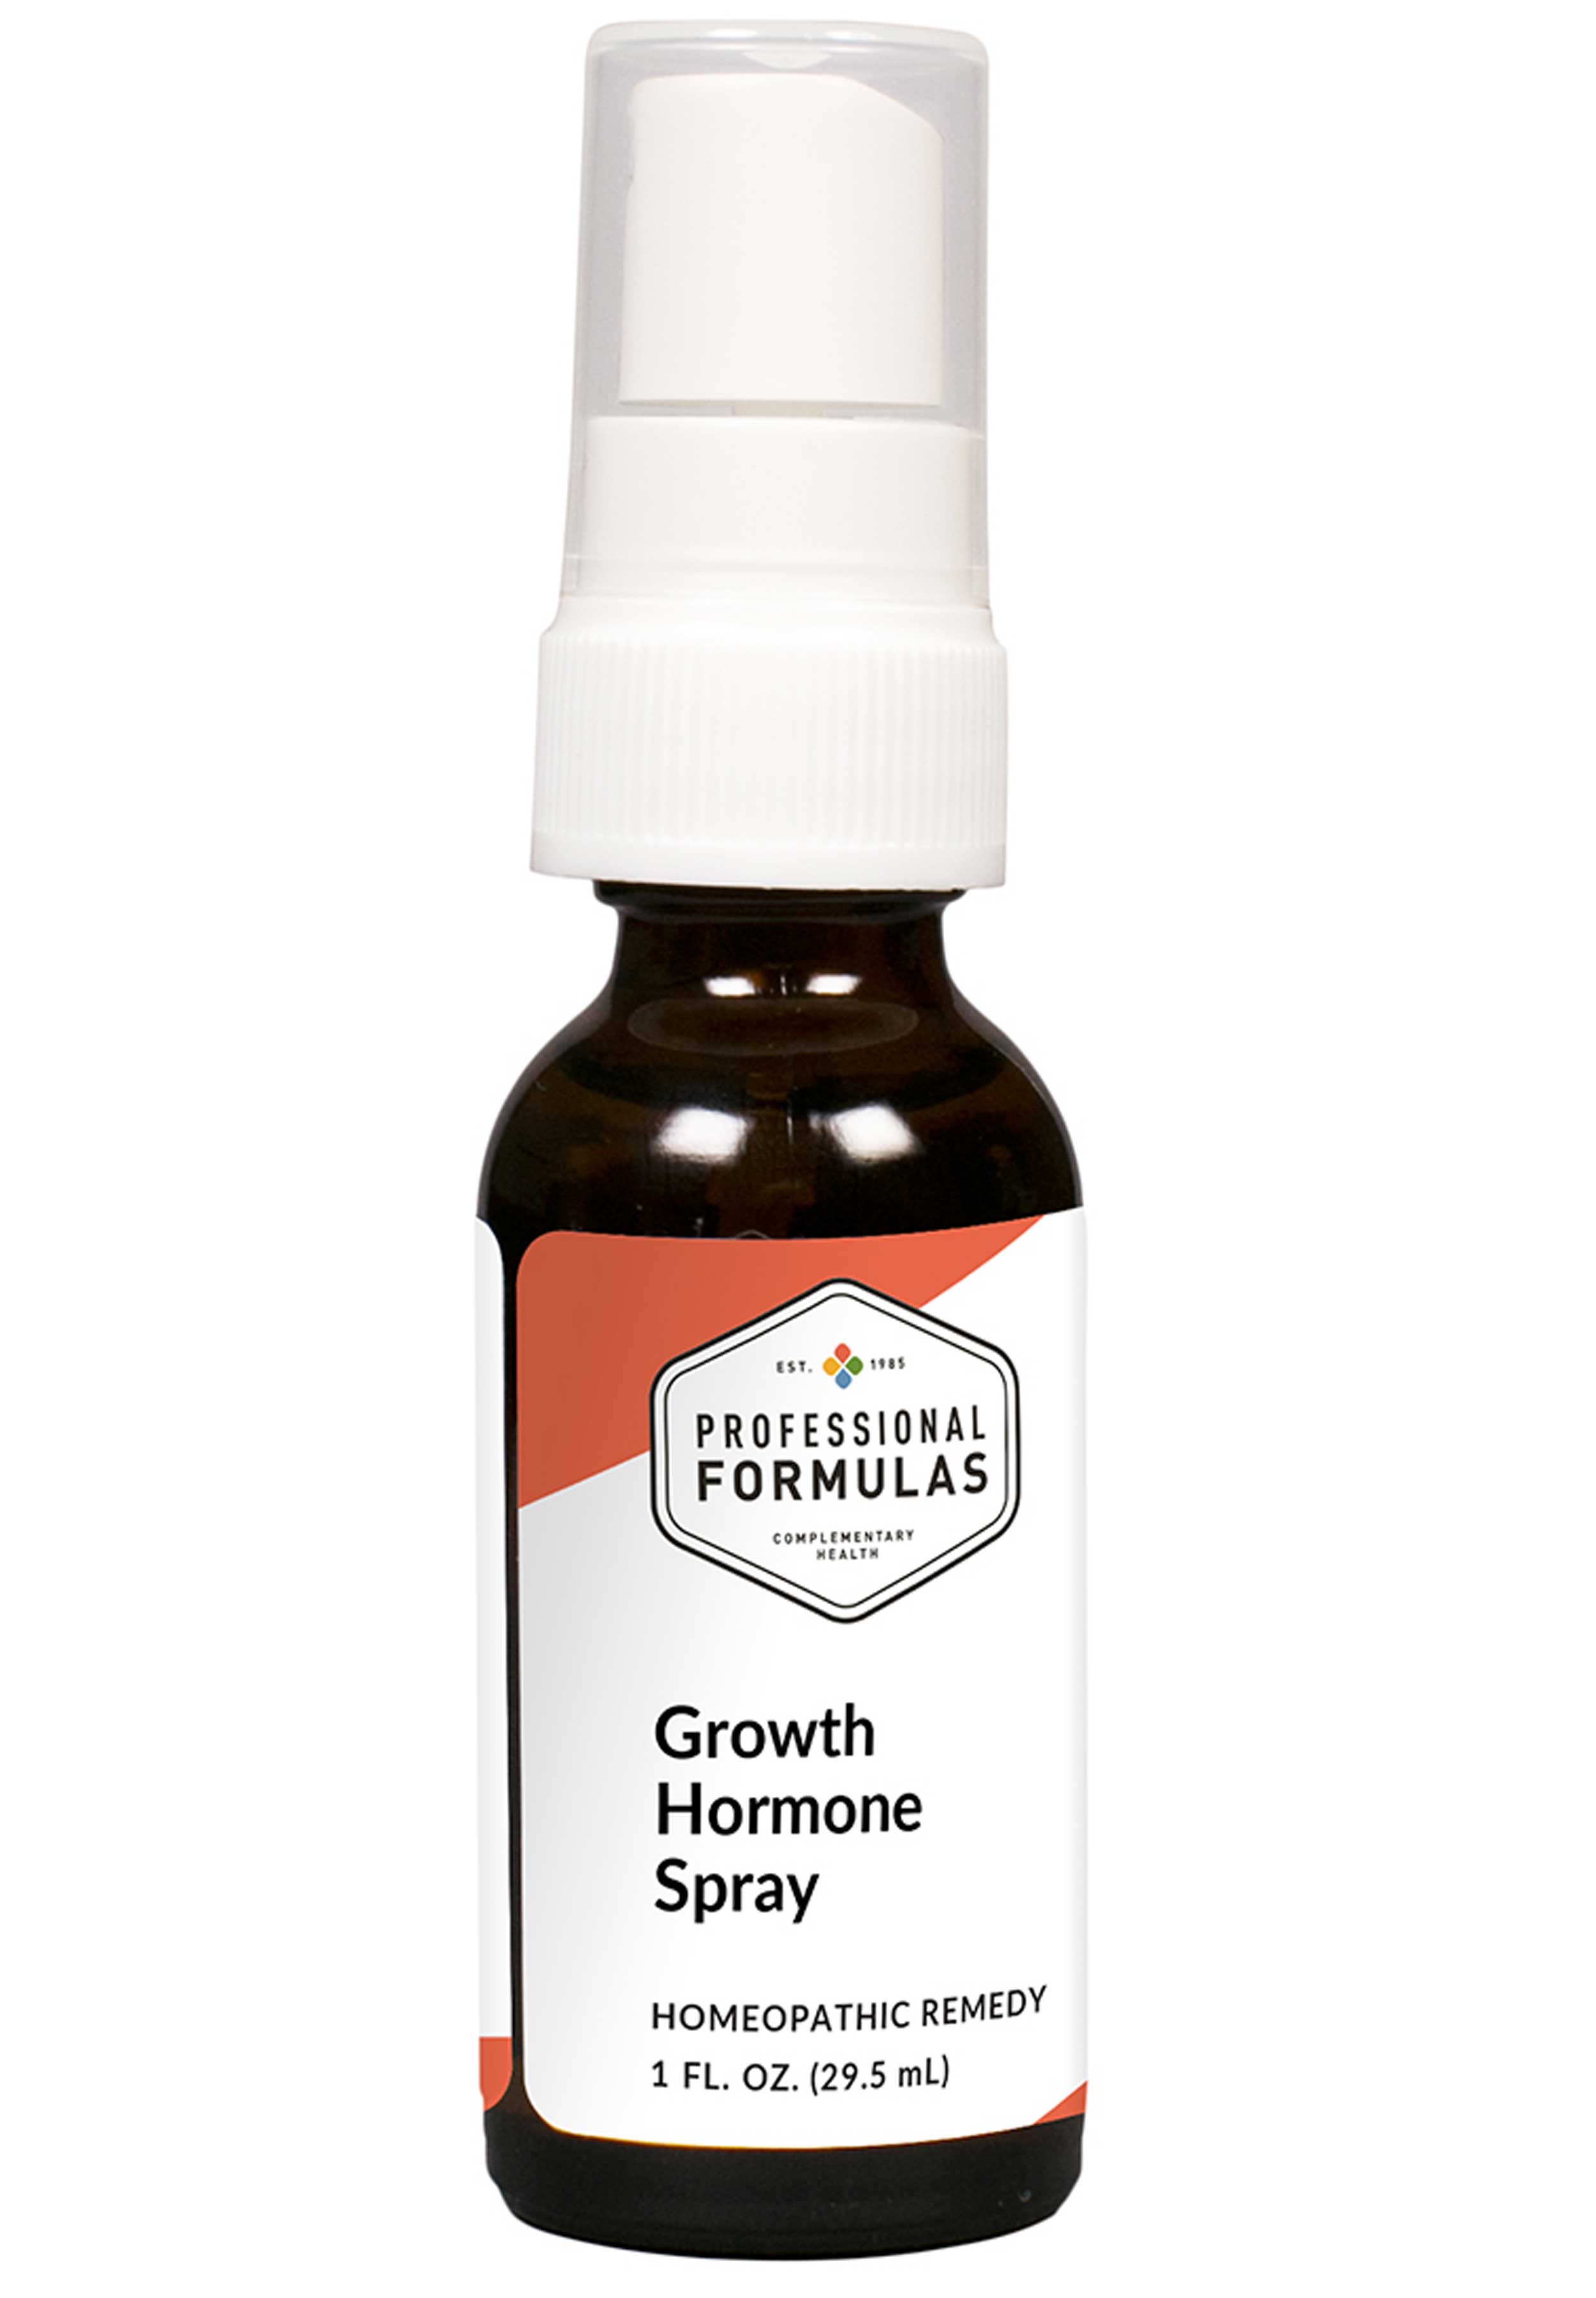 Professional Formulas Growth Hormone Spray